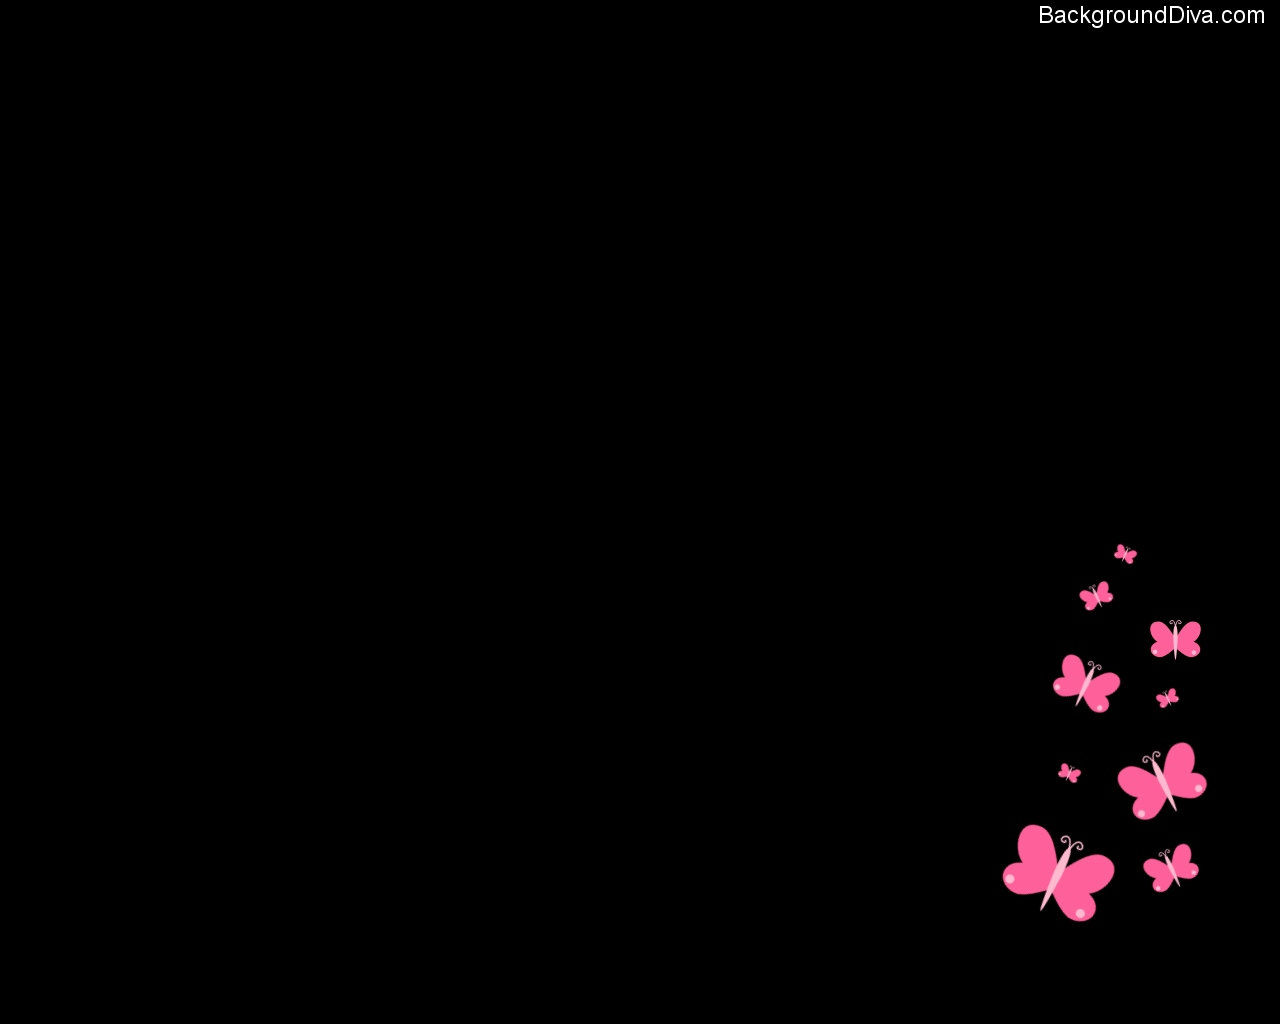 Pink And Black Backgrounds For Desktop 1280x1024